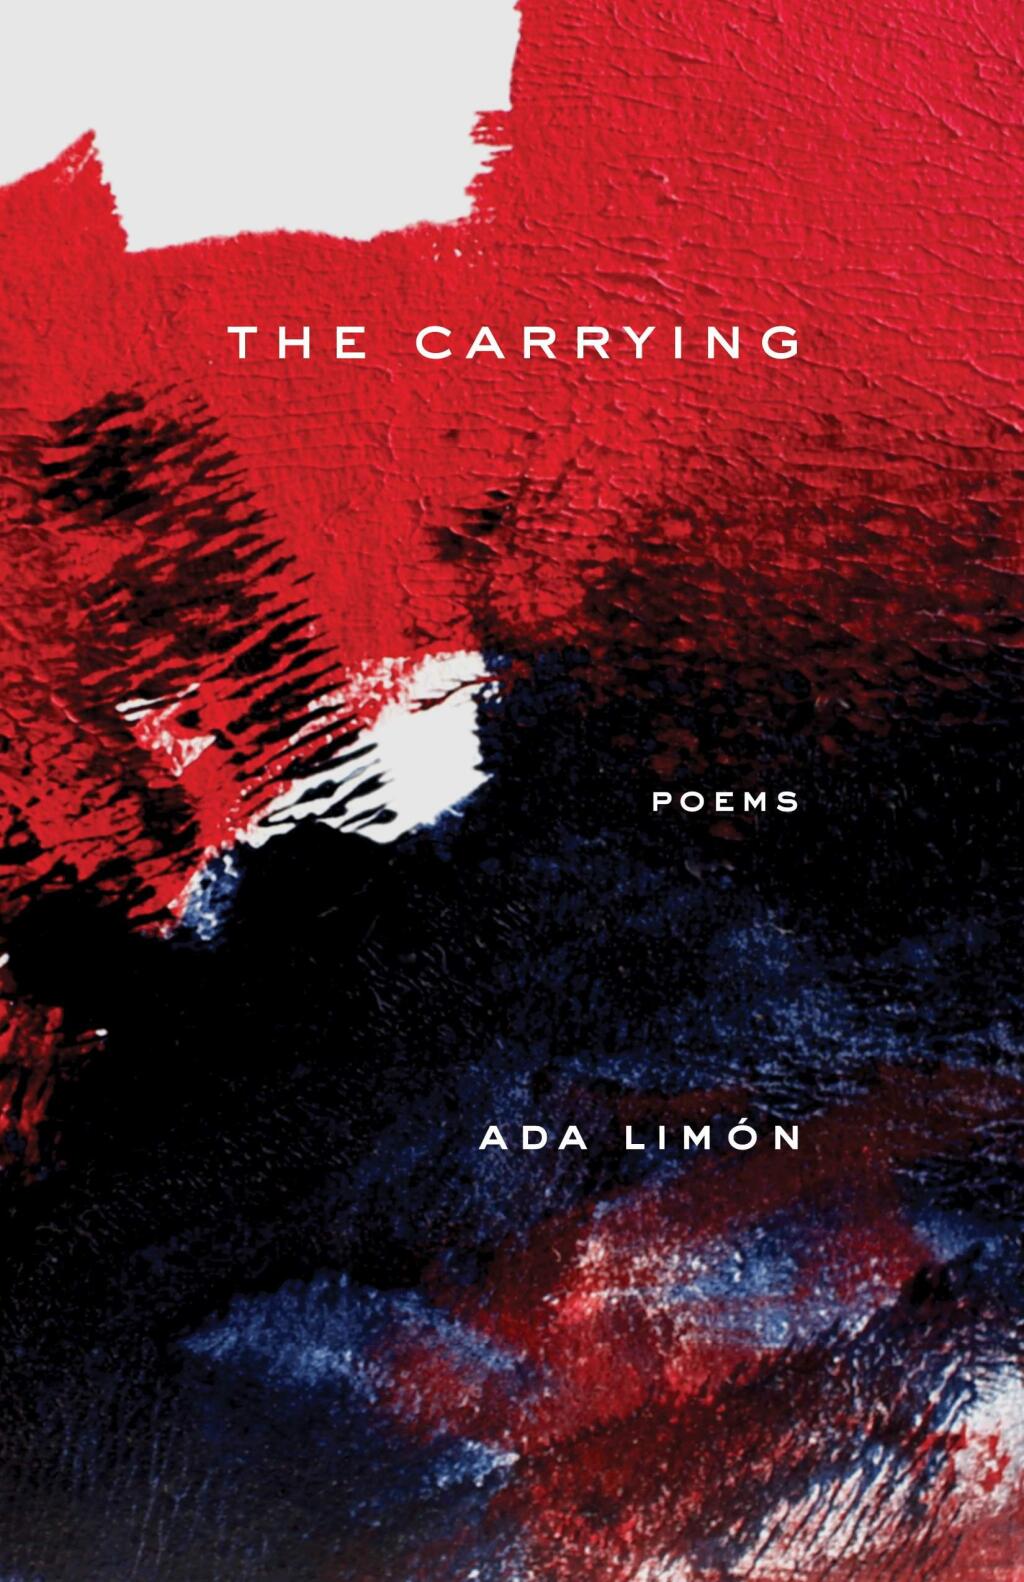 Ada Limon's award-winning book of poerty.